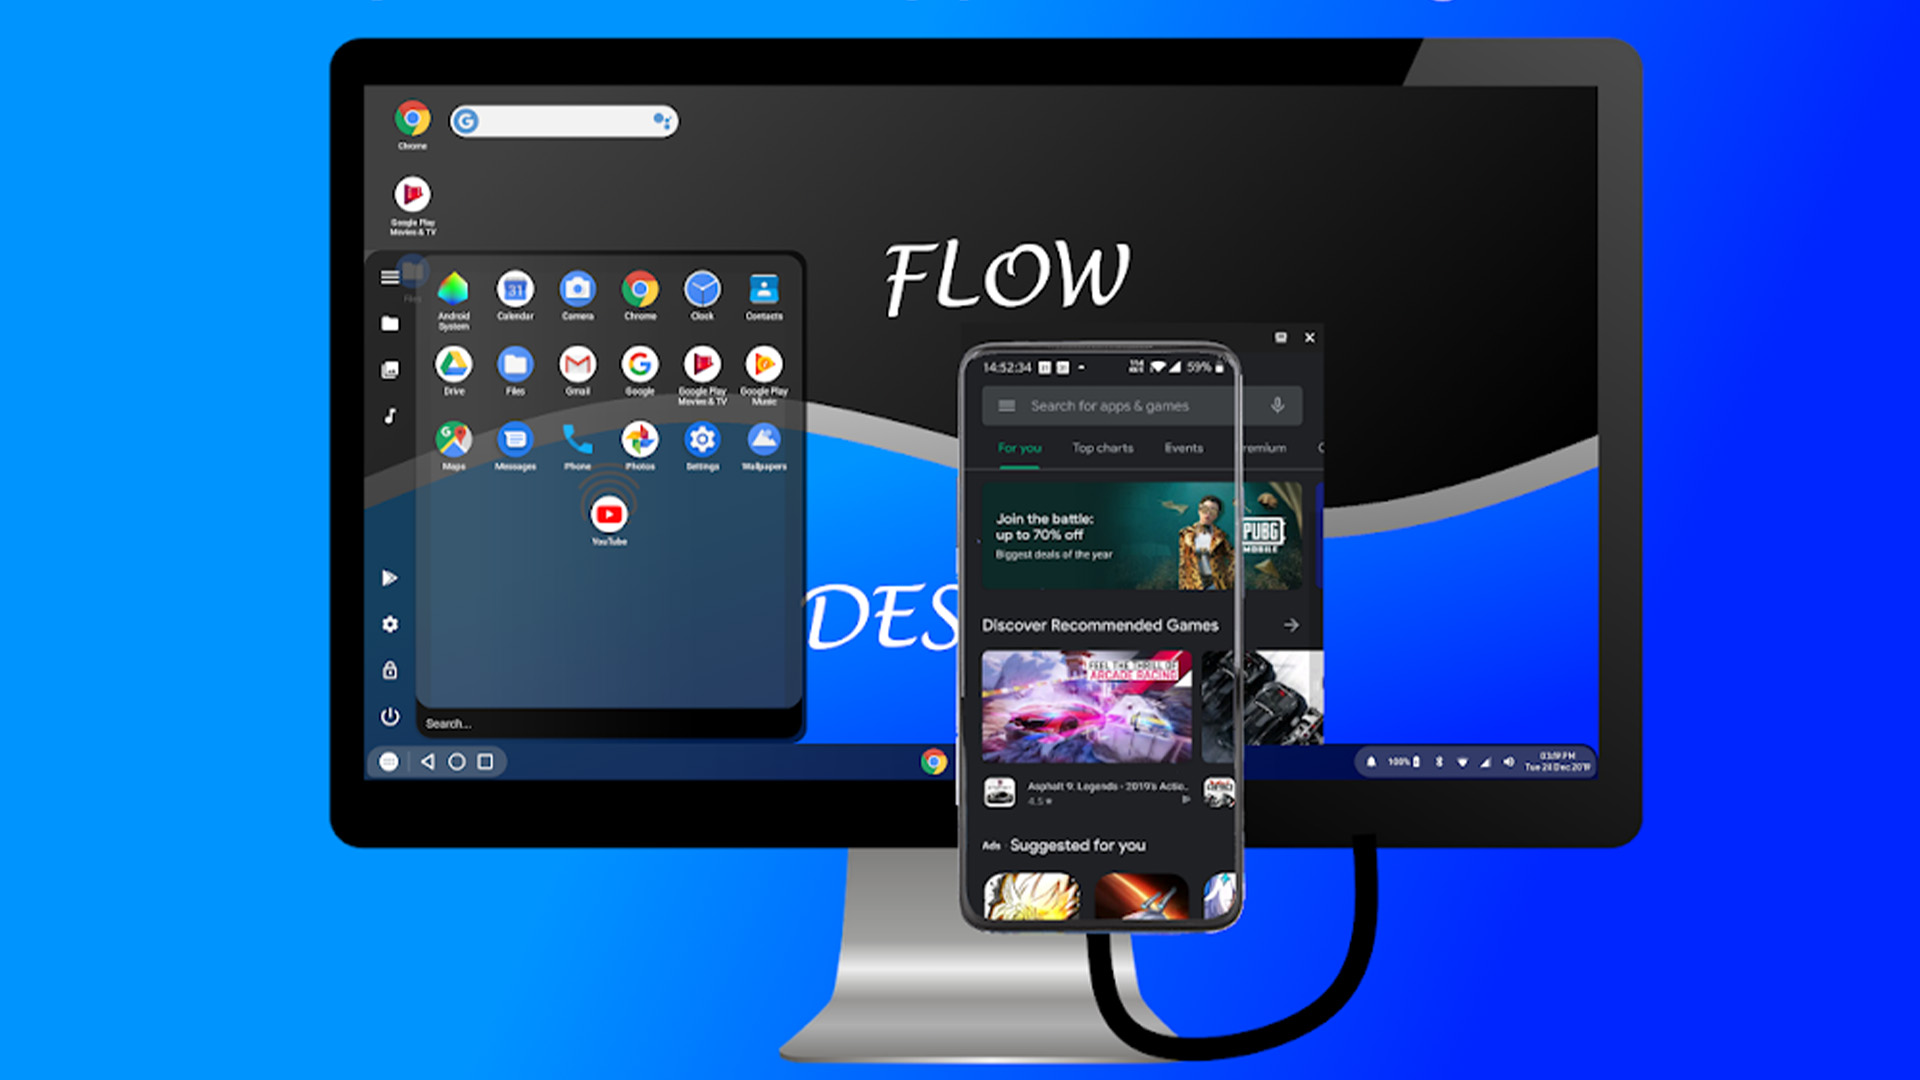 Android Apps Weekly - Flow Desktop screenshot